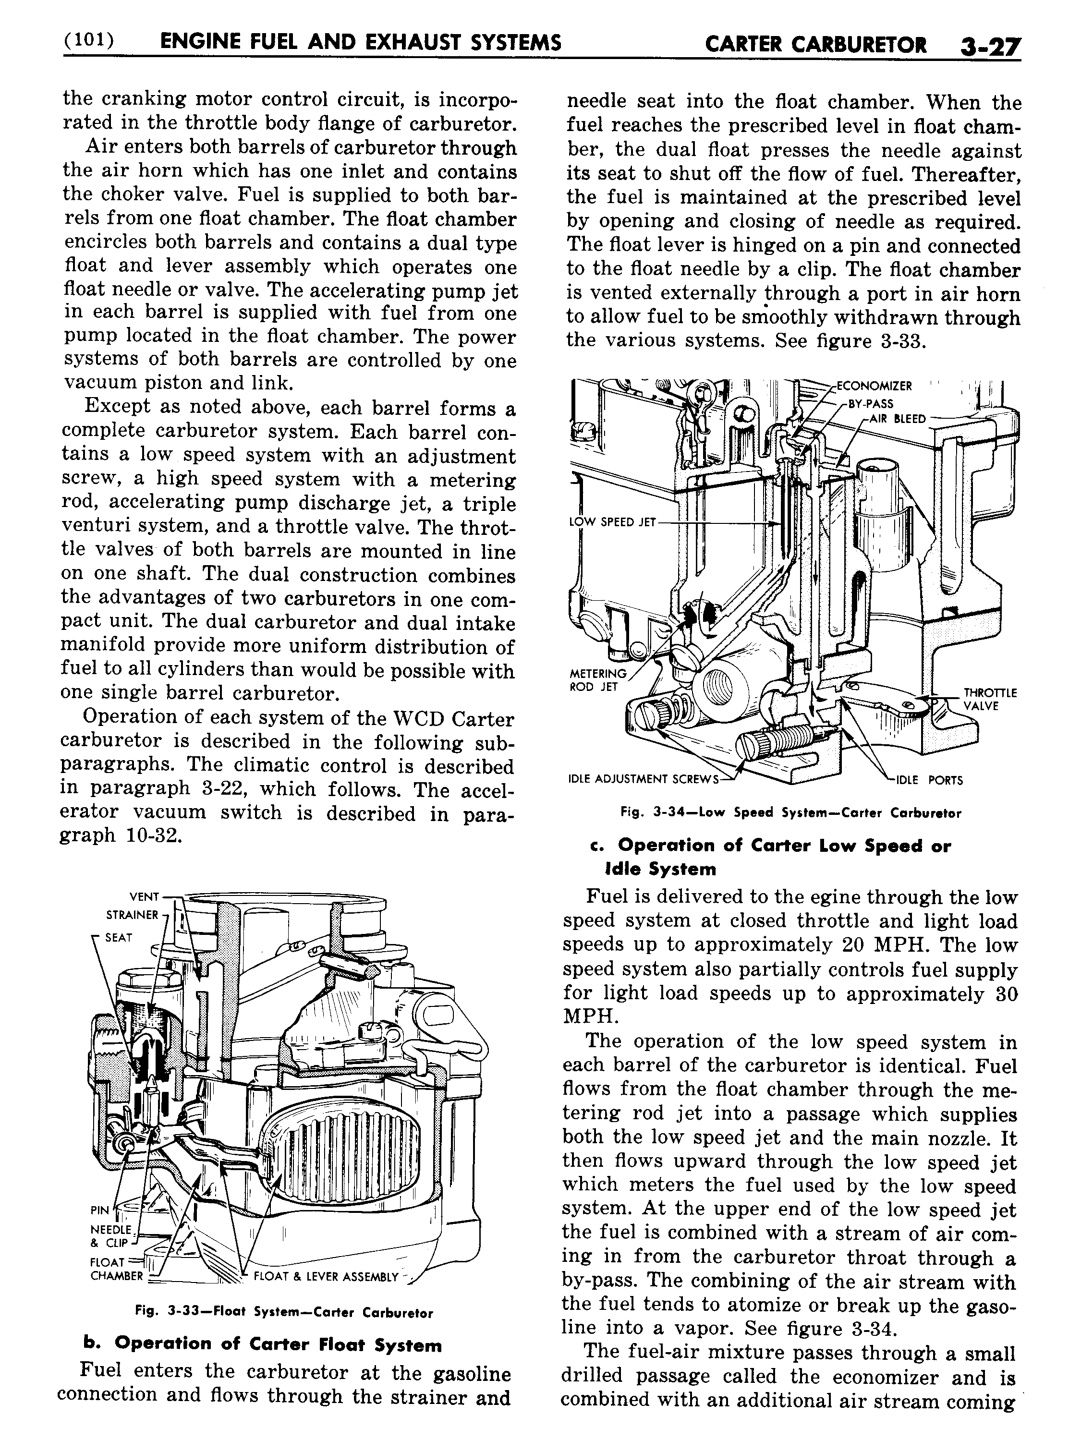 n_04 1948 Buick Shop Manual - Engine Fuel & Exhaust-027-027.jpg